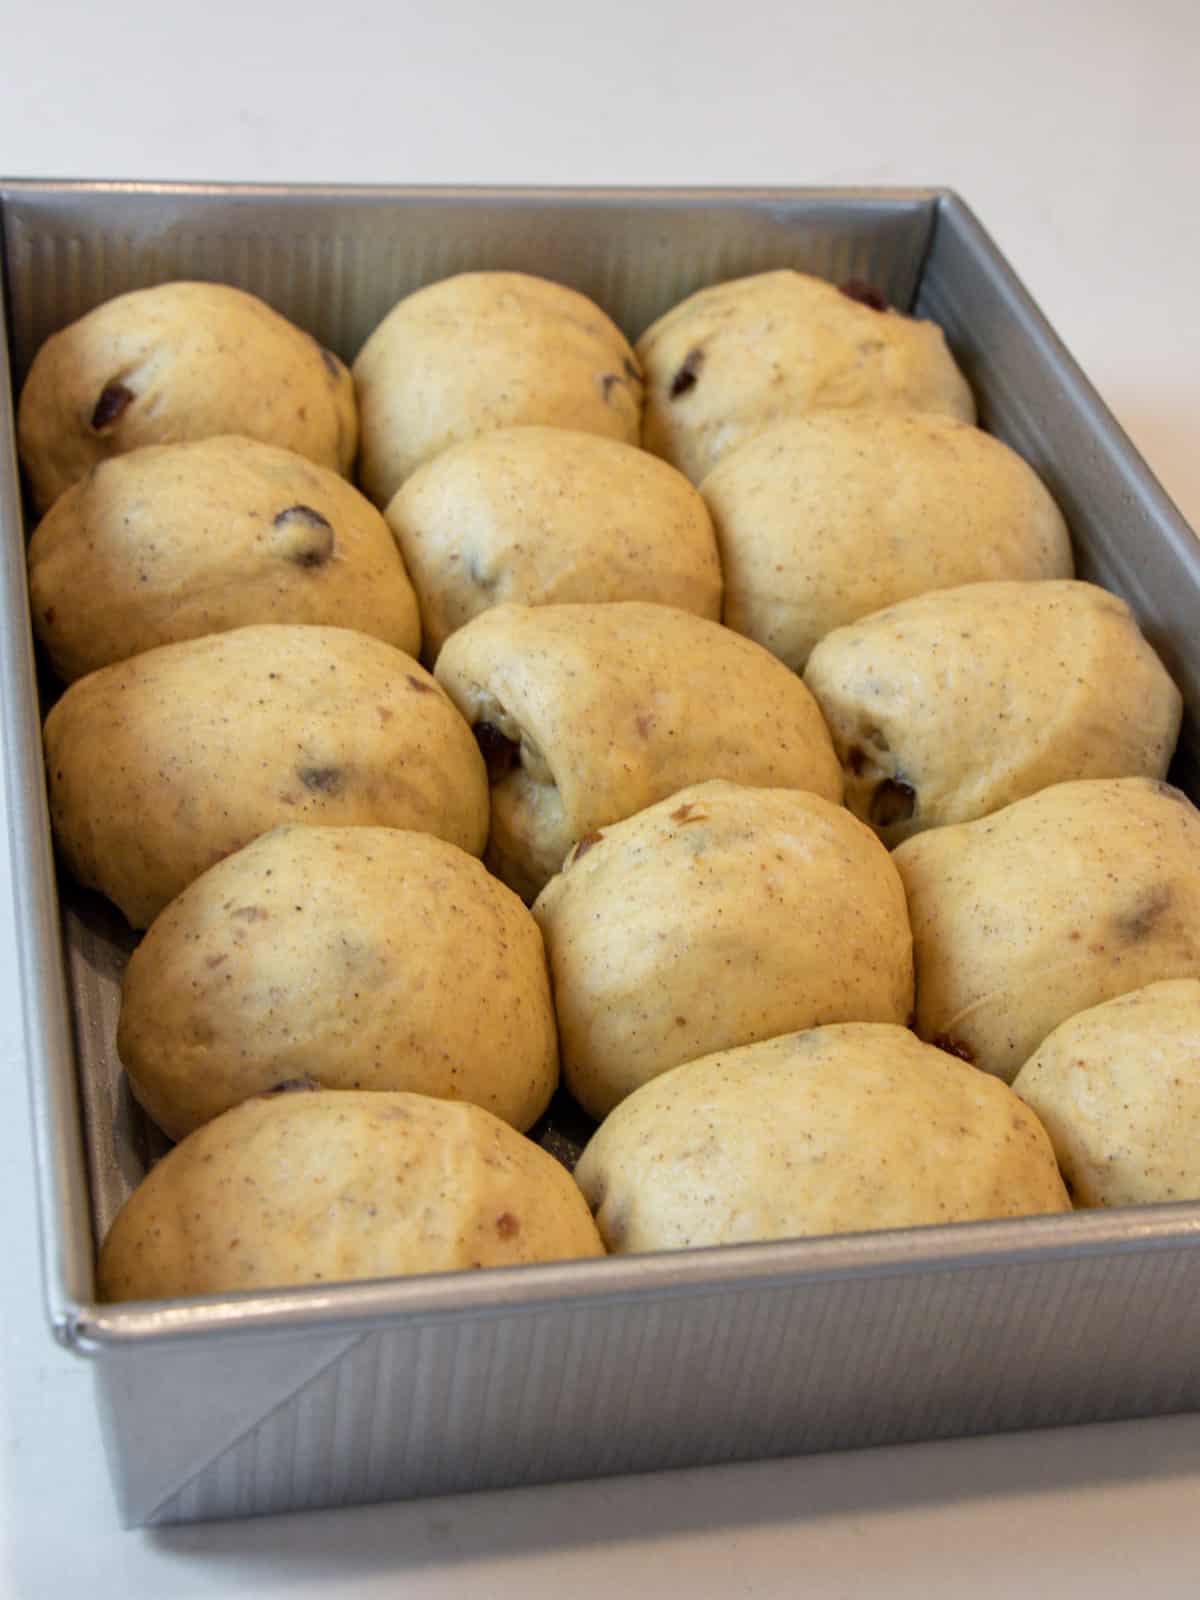 Risen rolls of dough in a baking dish.